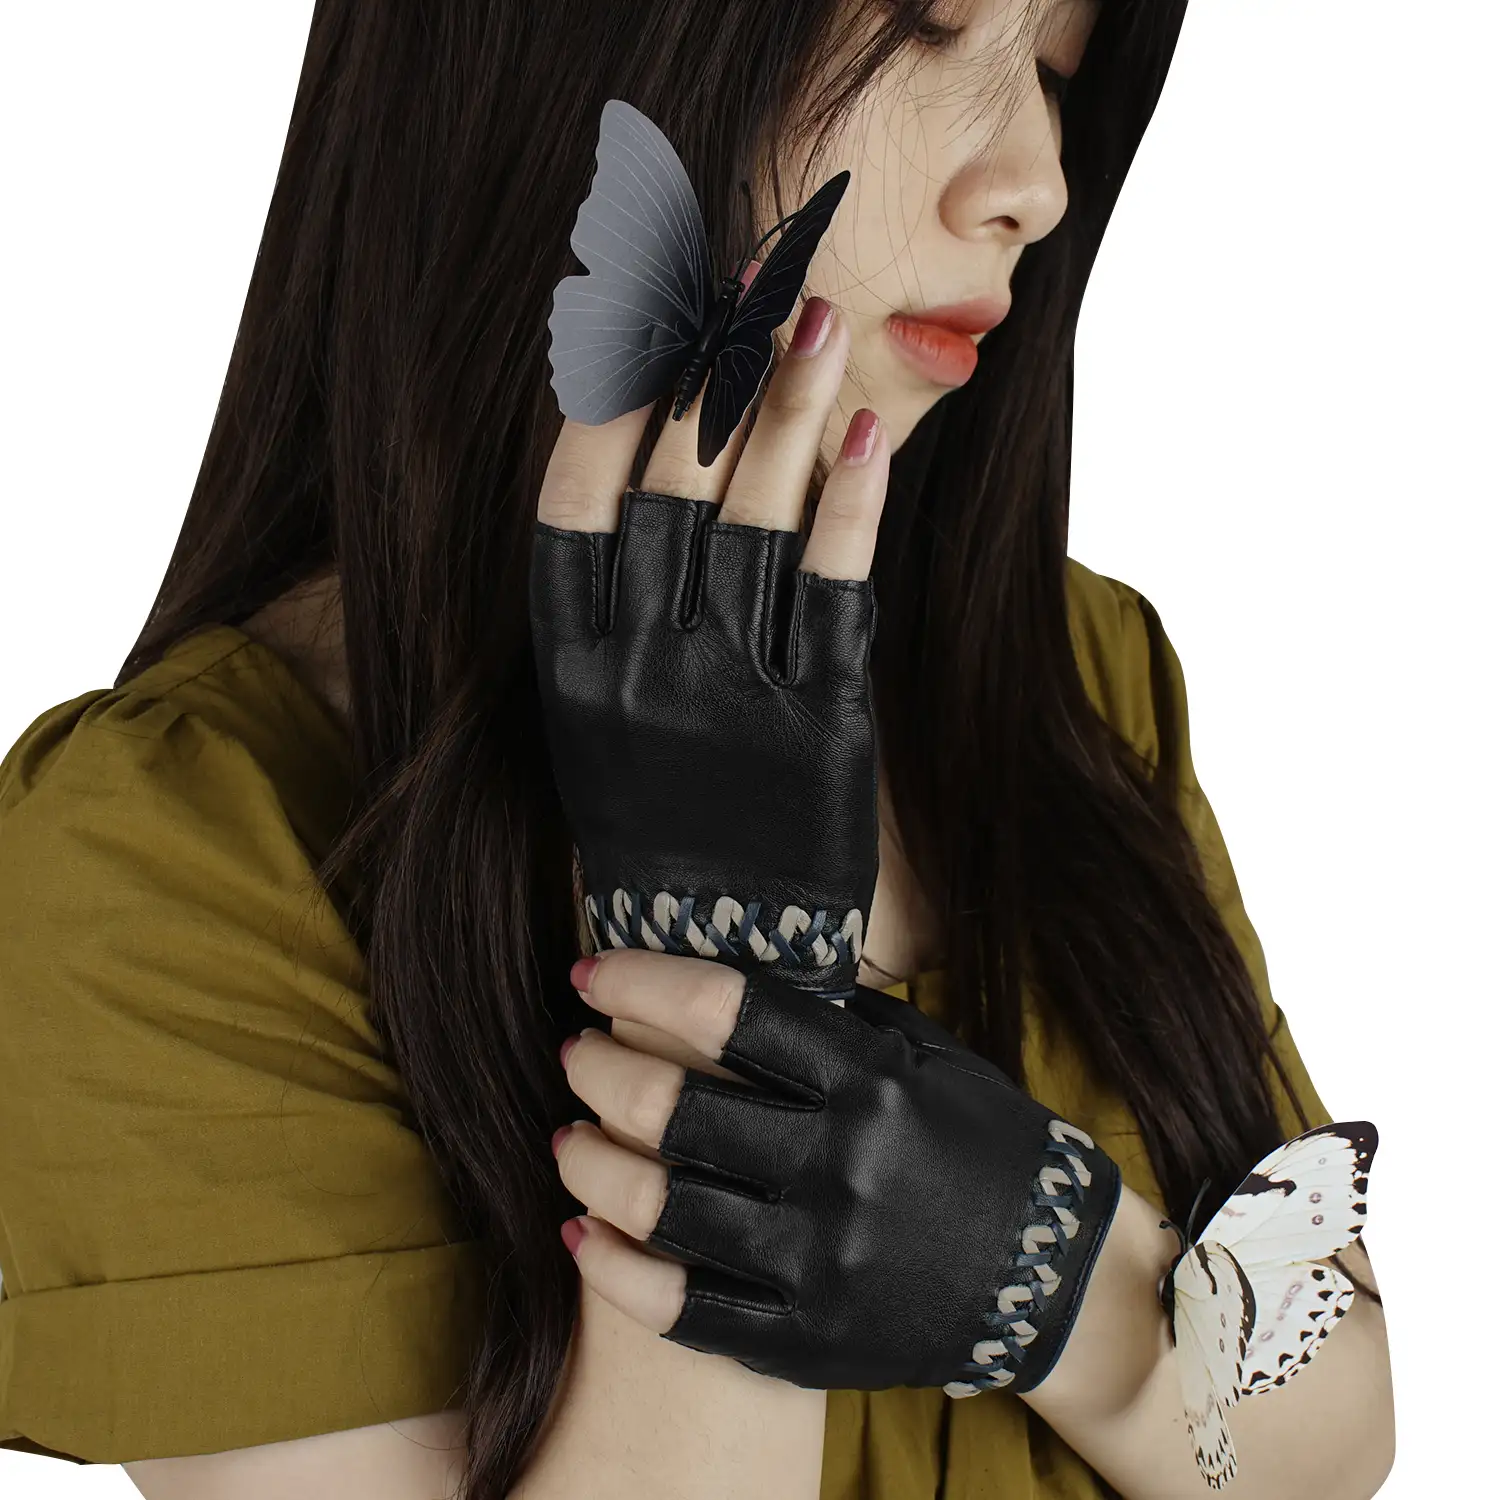 GSG אופנה צבע בלוק עור לקלוע קישוט קמטים חצי אצבע נשים ללא אצבעות נהיגה מעוור טלה עור כפפות